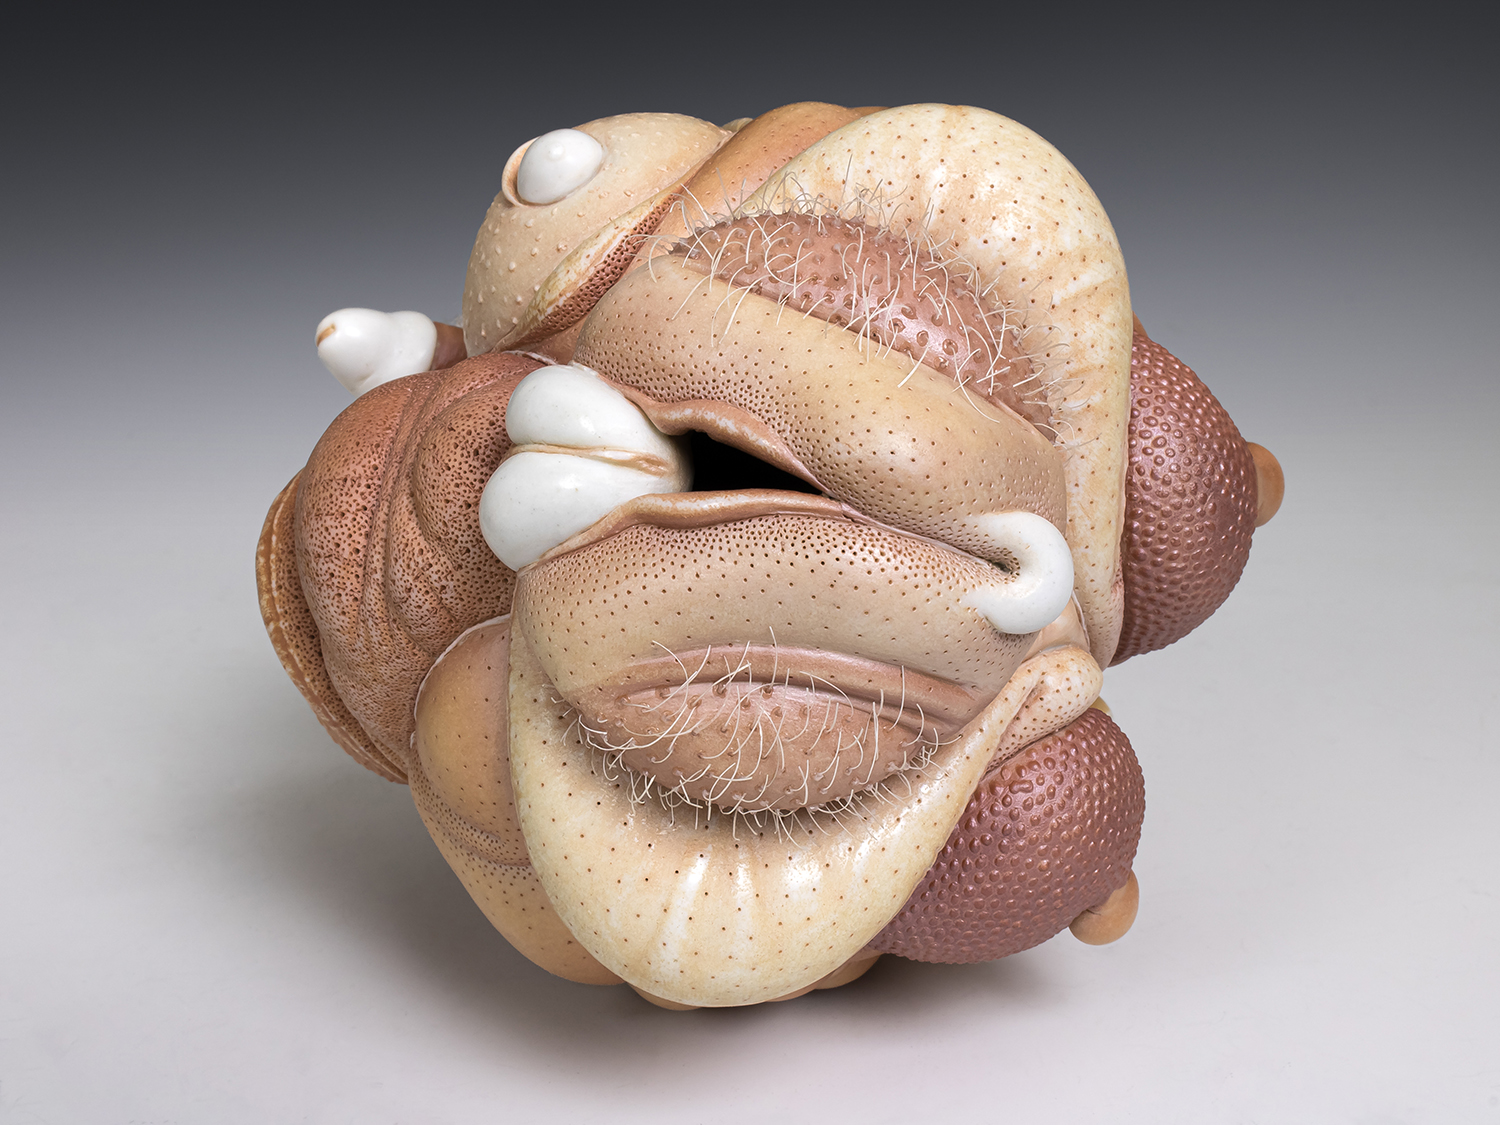 Jason Briggs "Olympia" (detail 5). porcelain, hair, and mixed media sculpture ceramics.